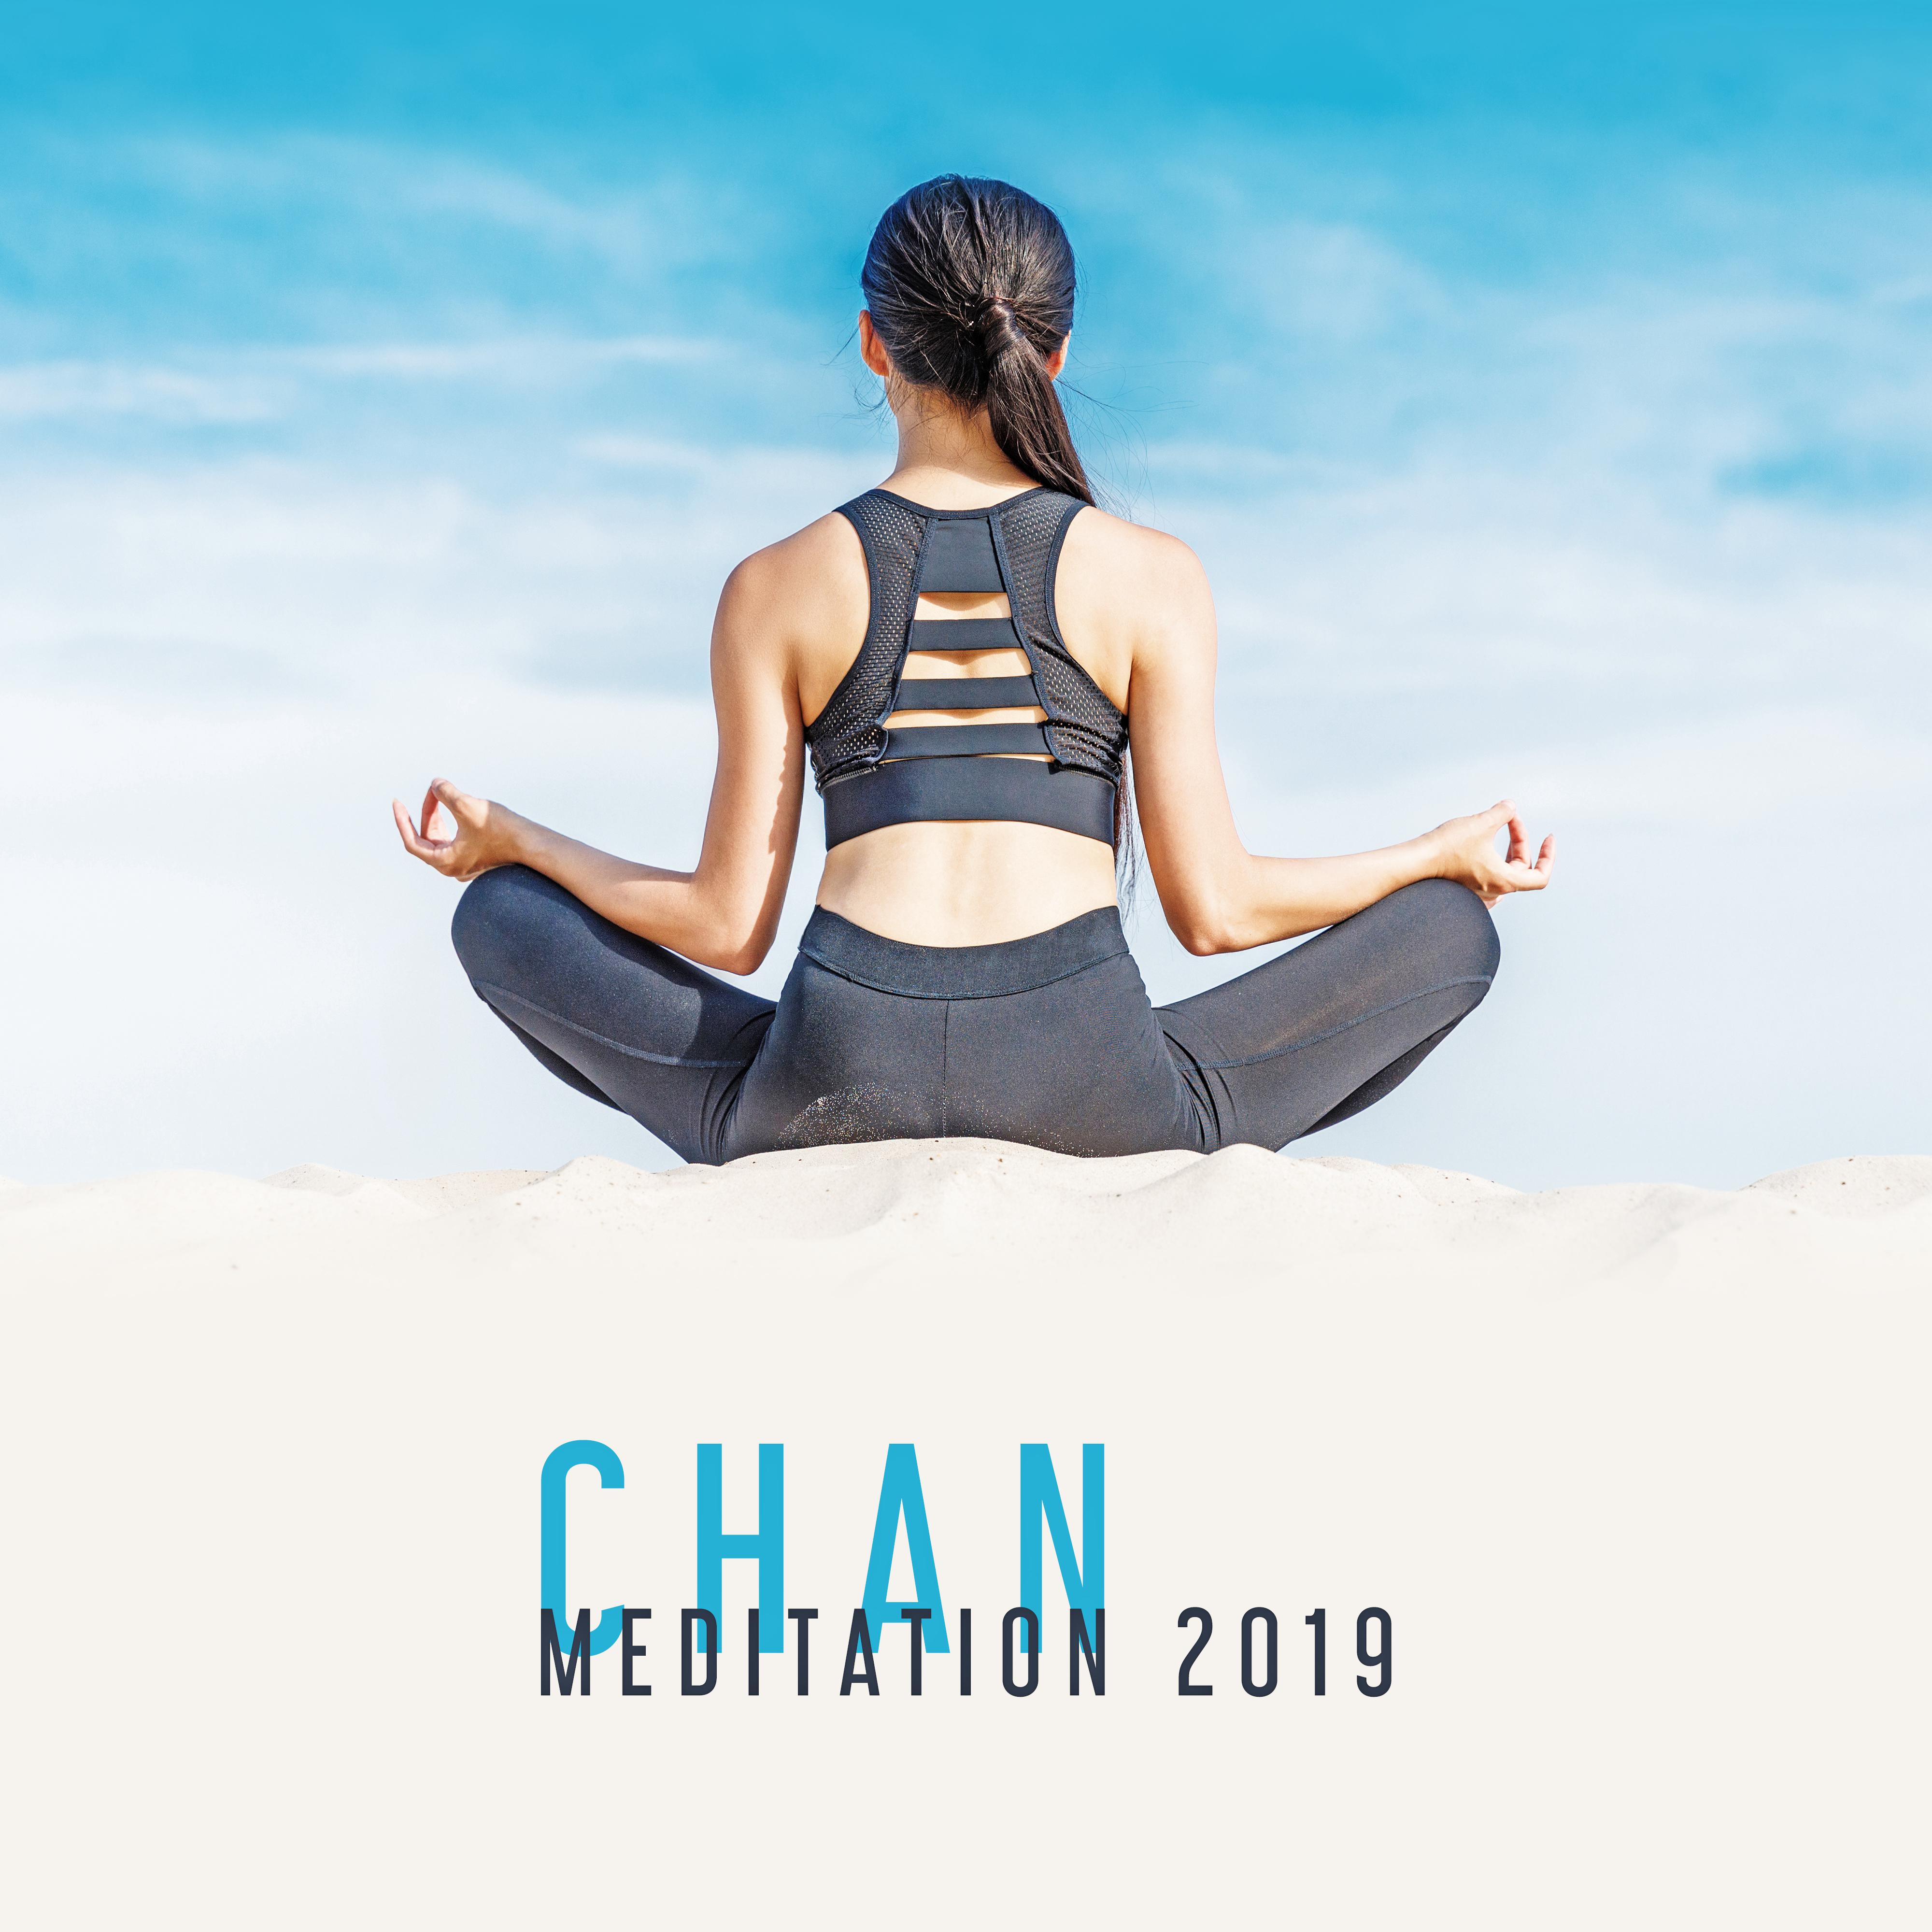 Chan Meditation 2019